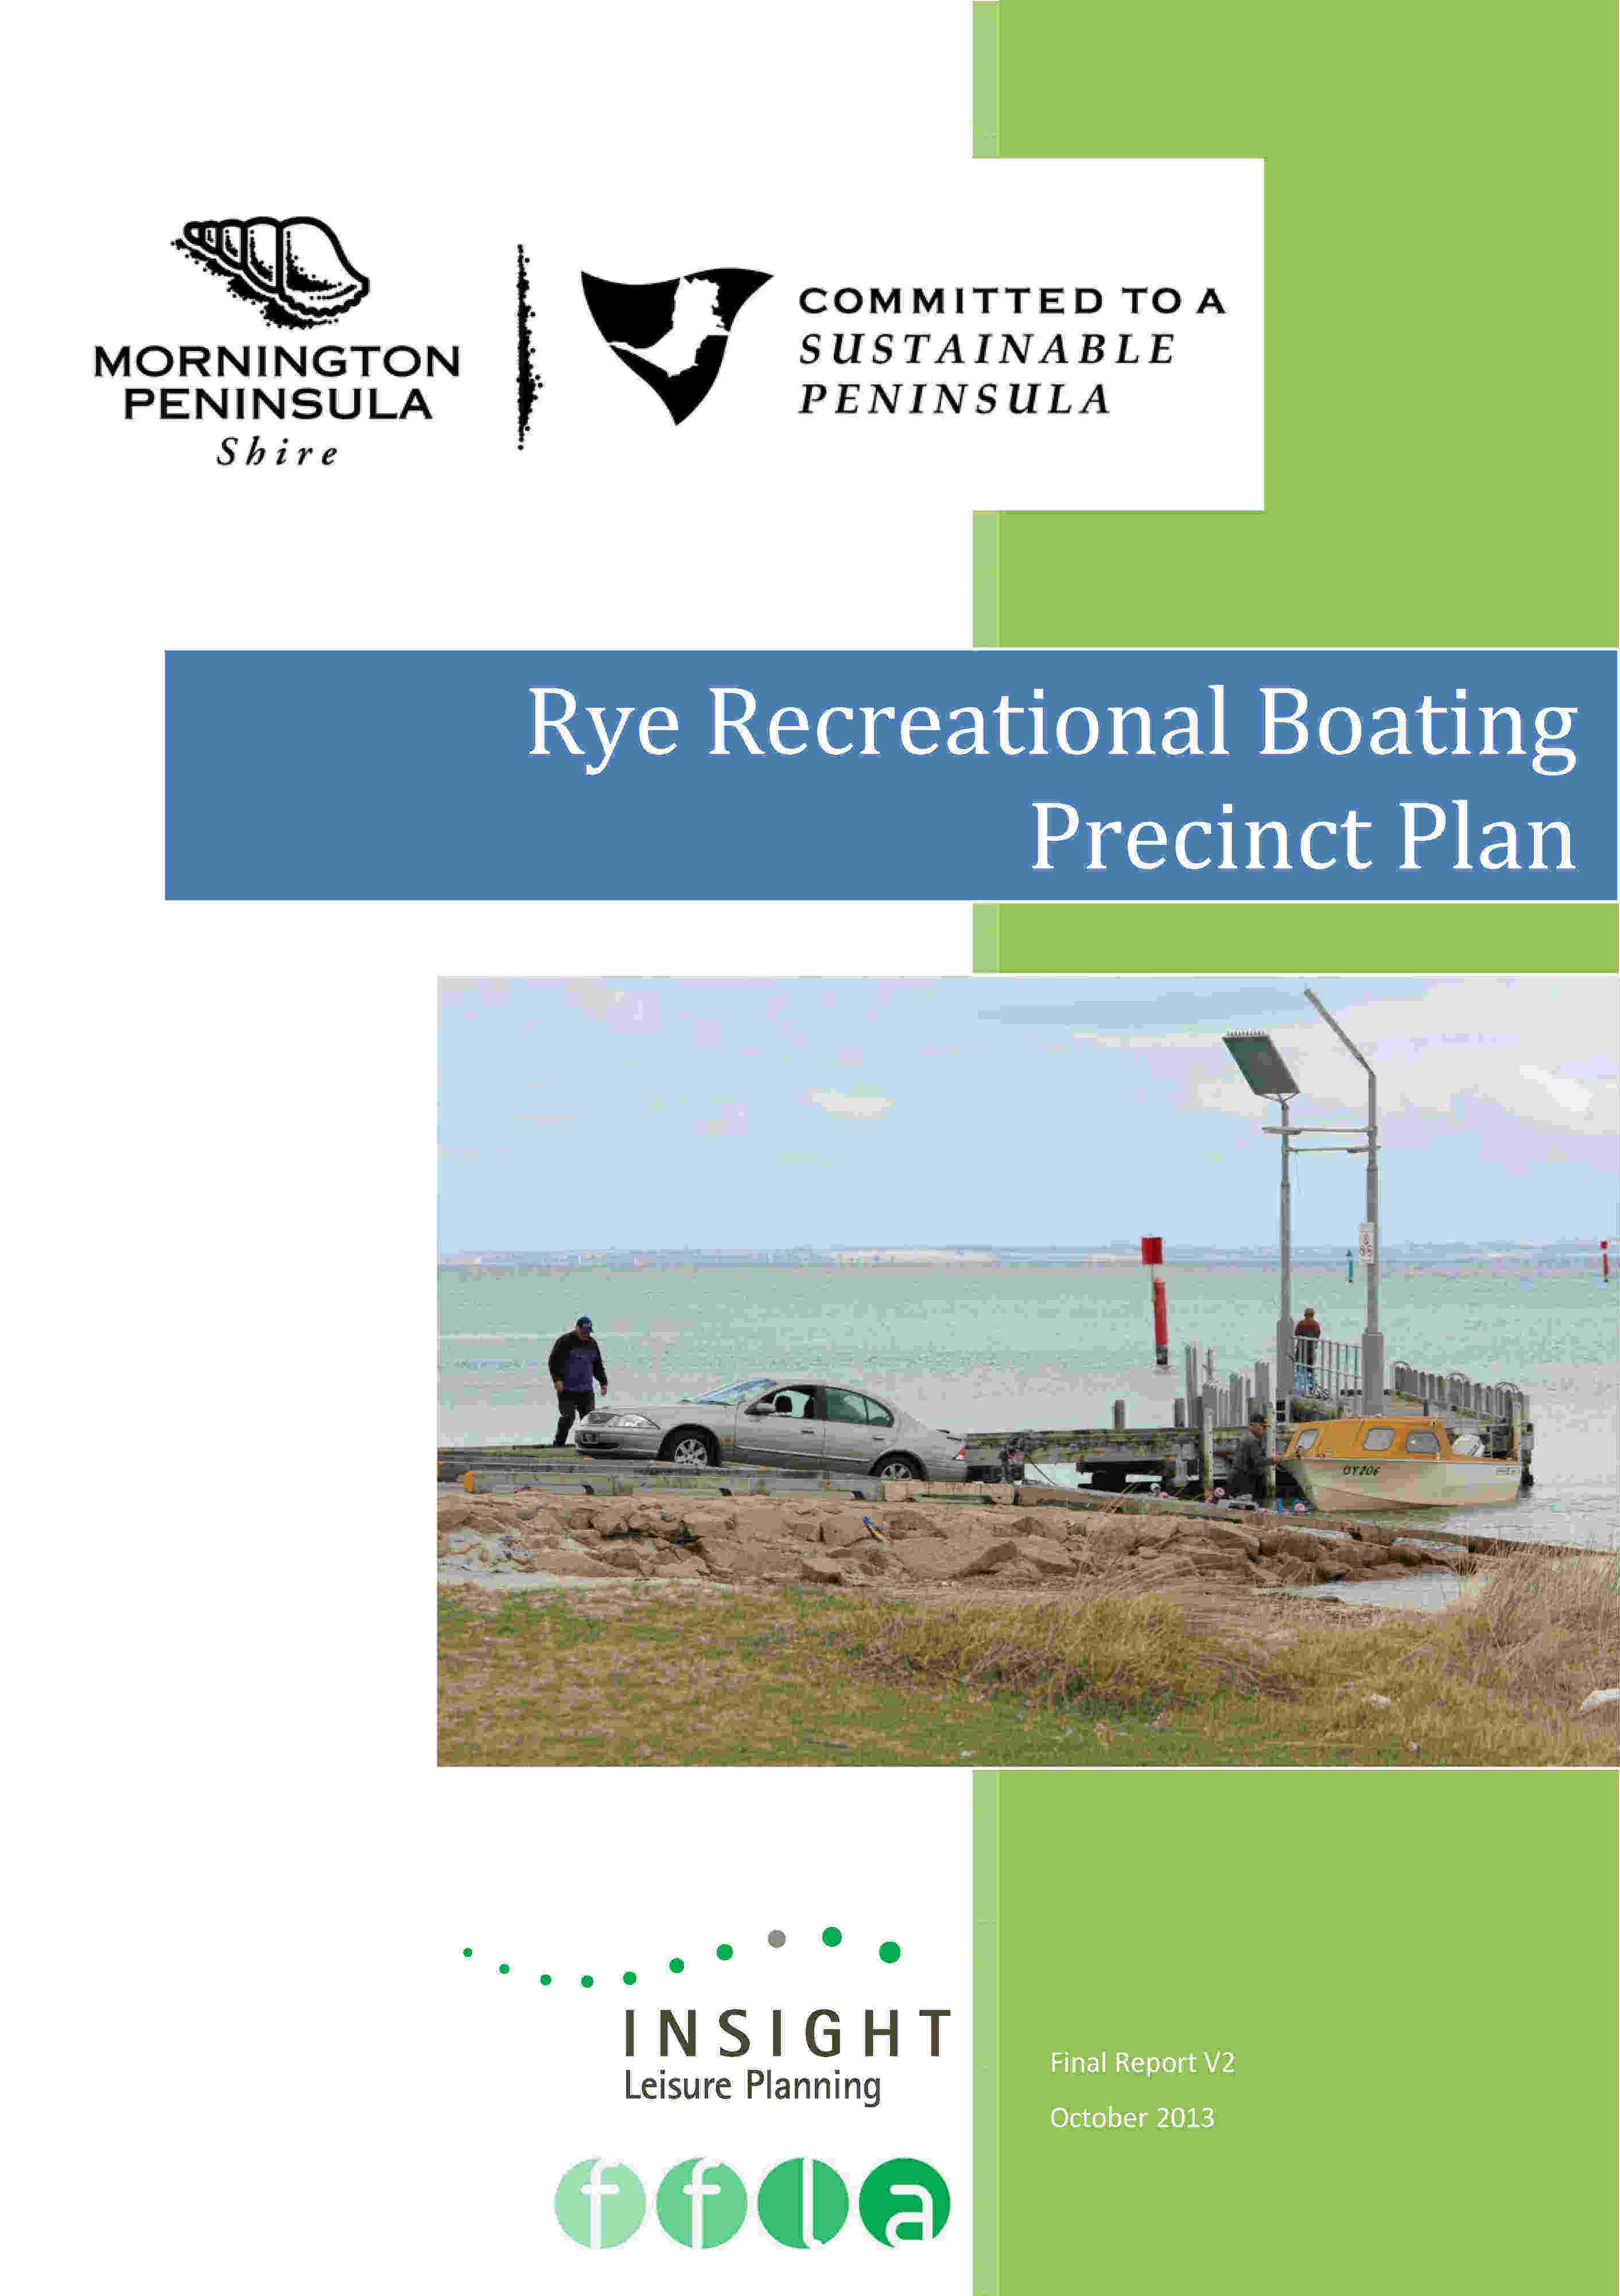 Planning and Management: Mornington Peninsula Shire Council - Rye Recreational Boating Precinct Plan